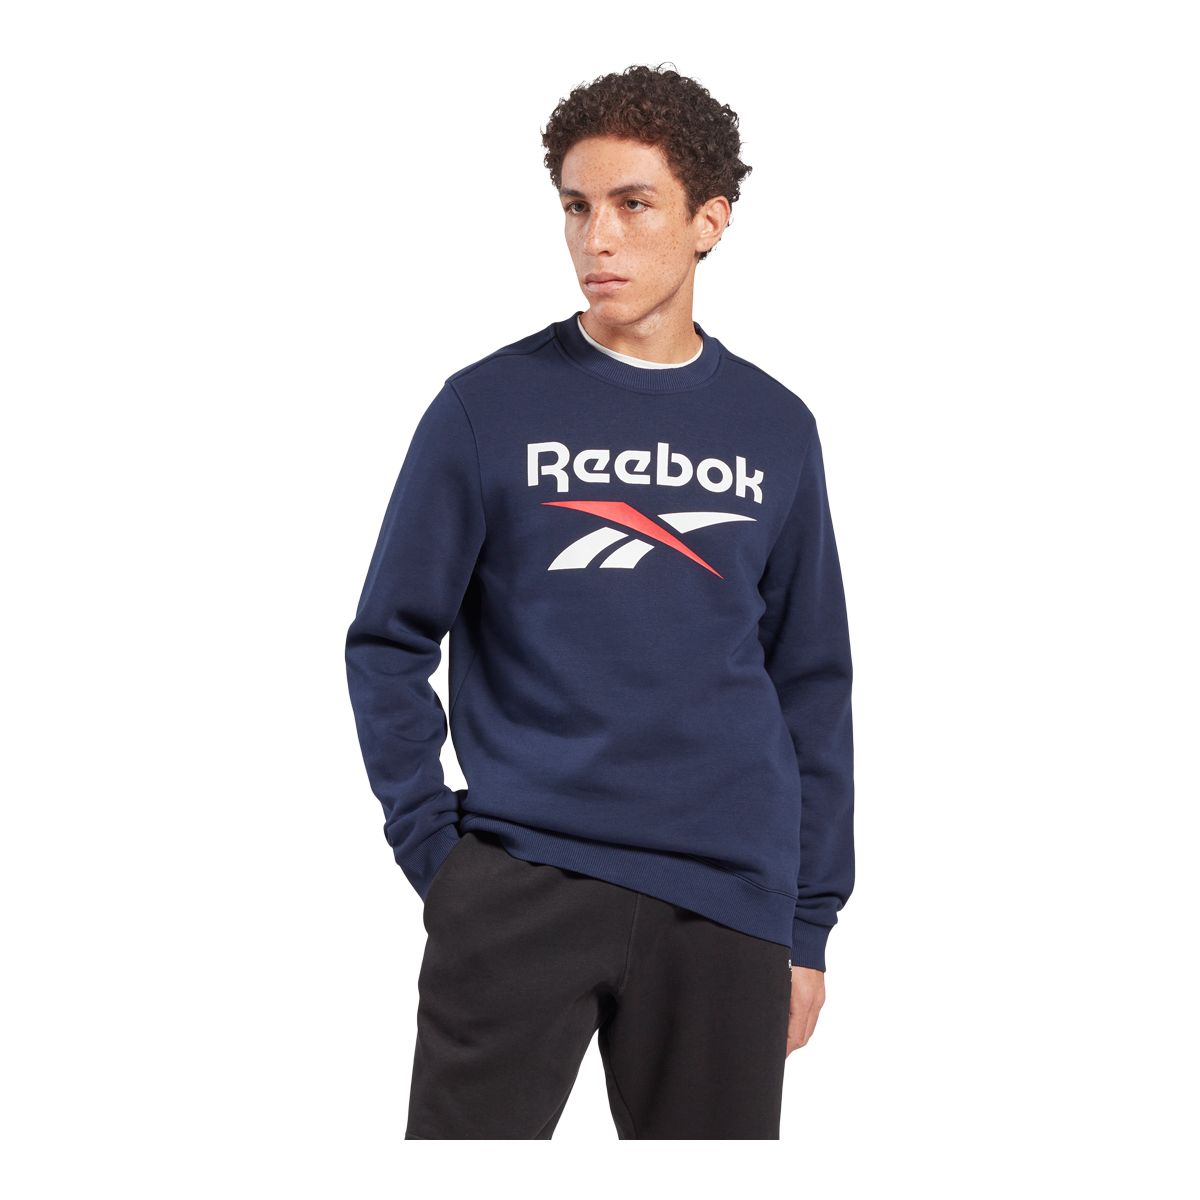 Reebok Men's Id Stacked Logo Sweatshirt